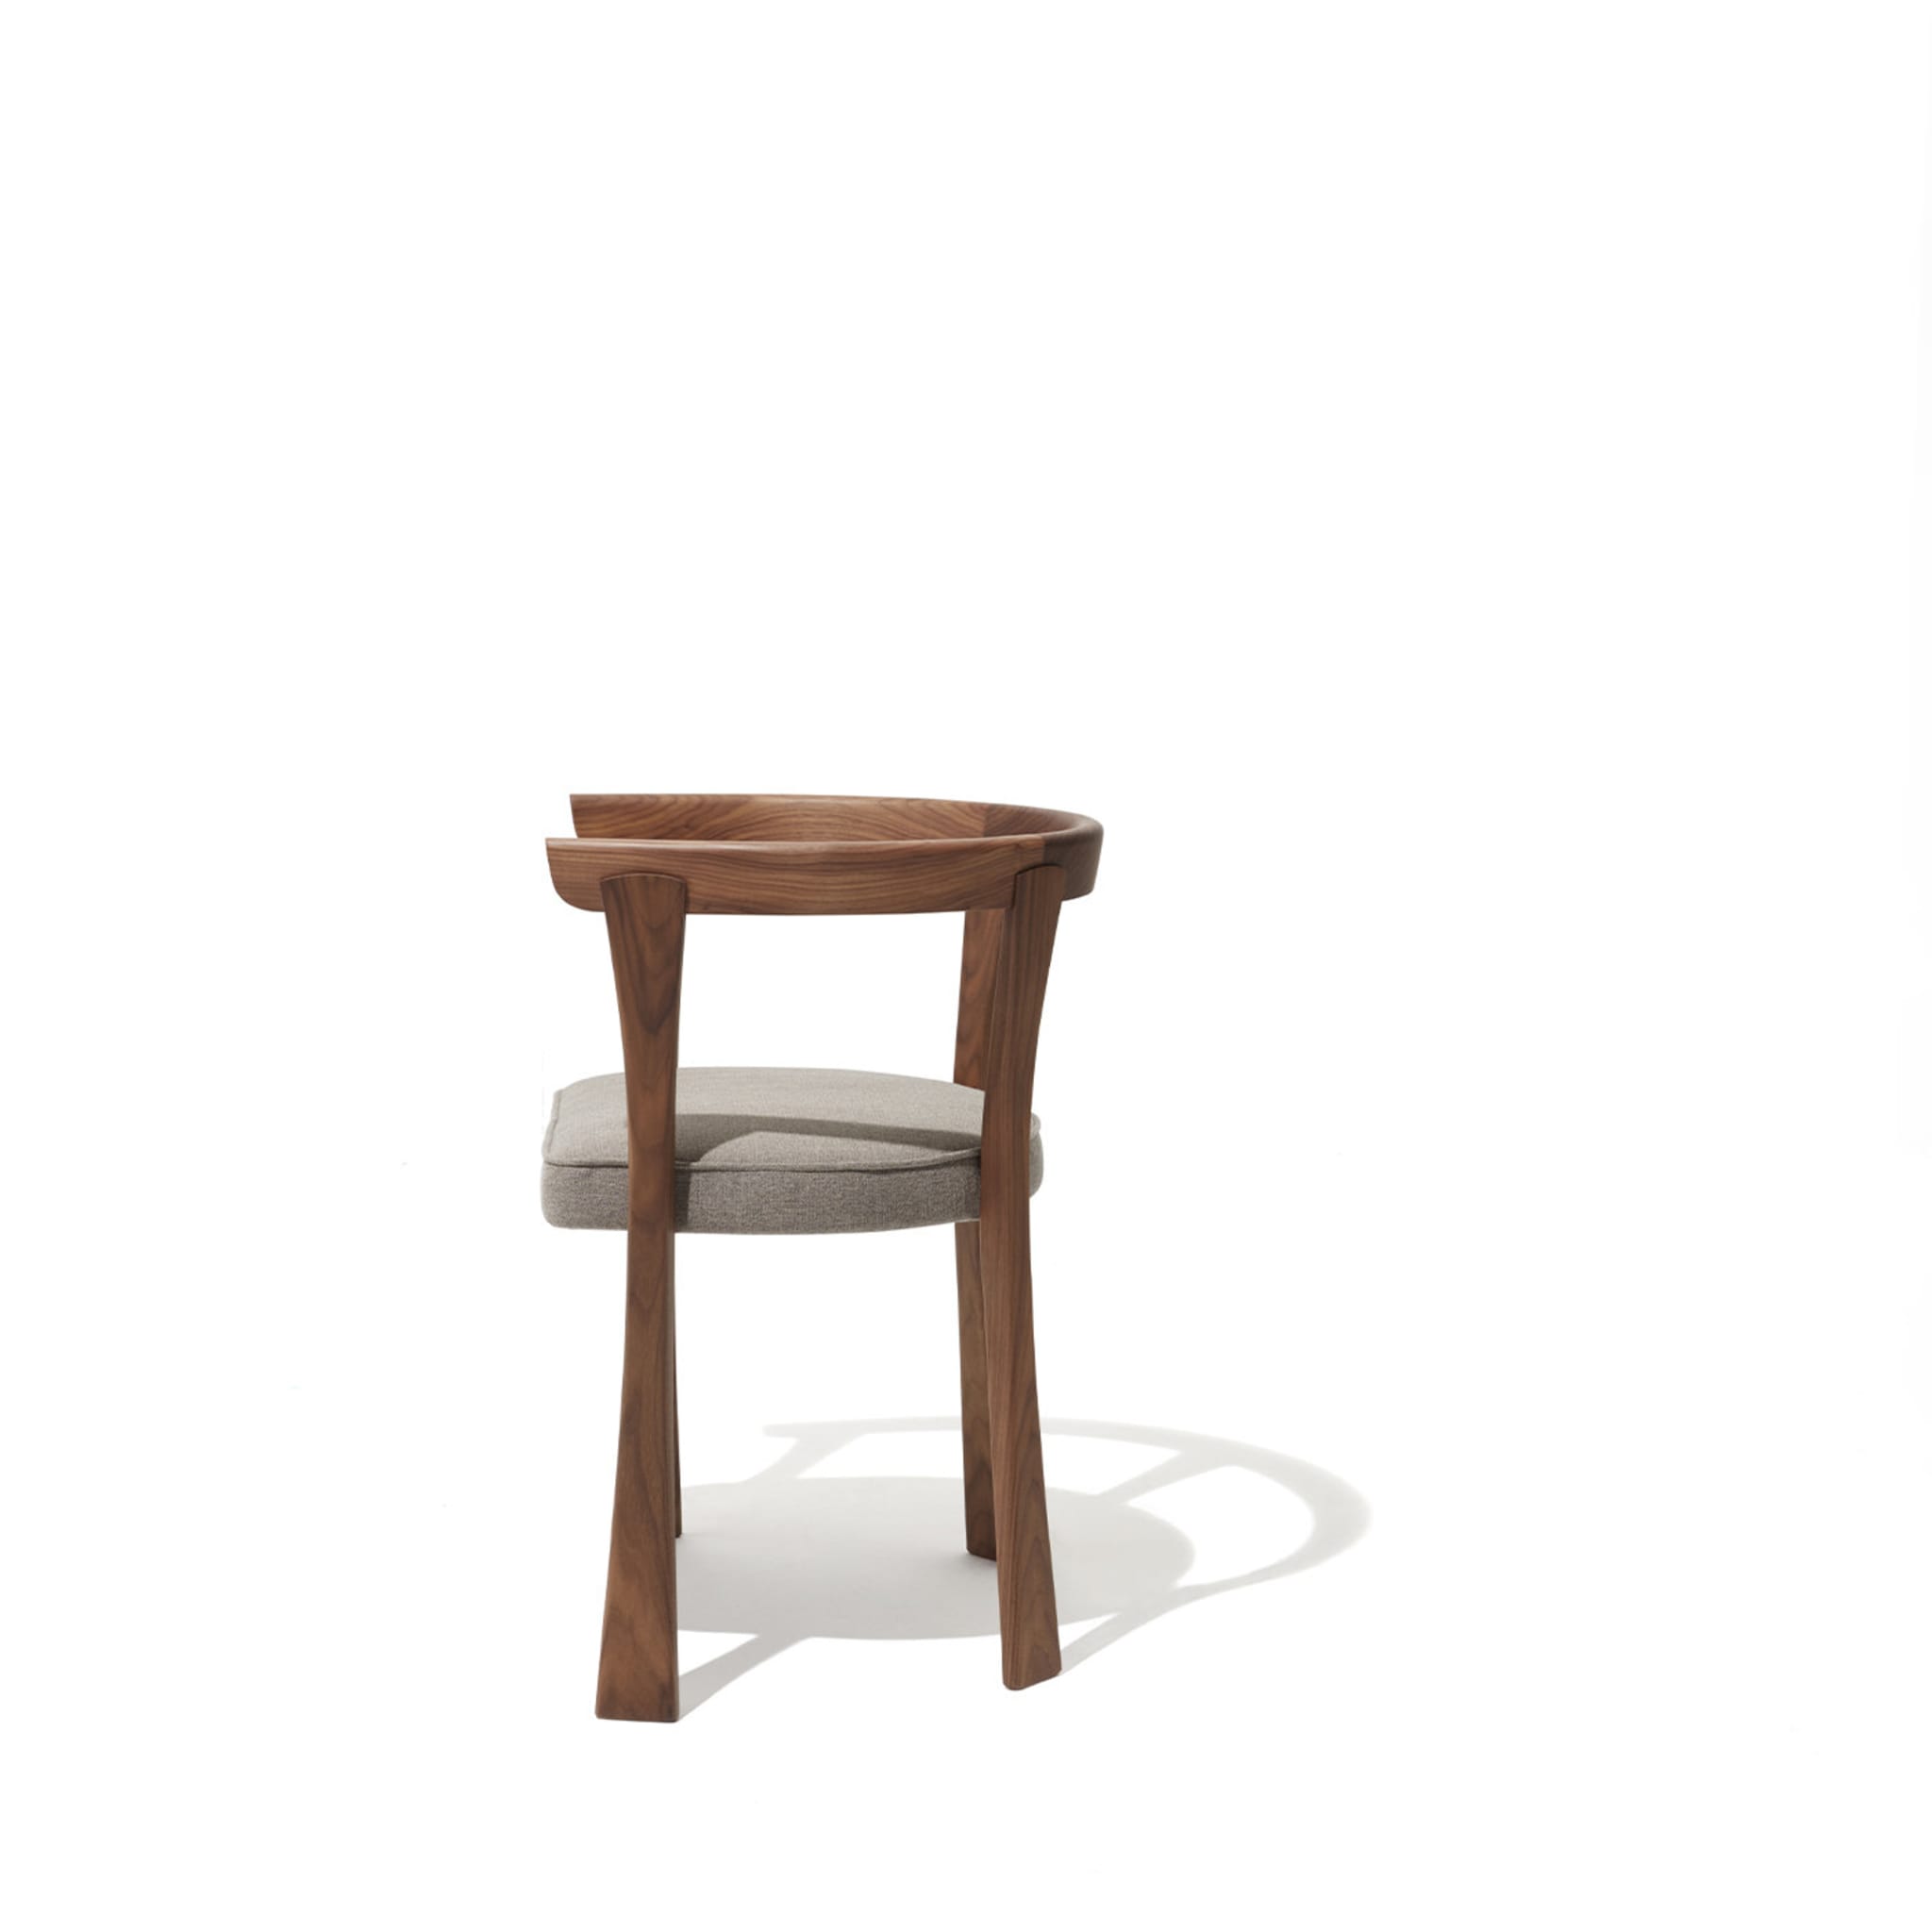 Padded Floridita Chair - Alternative view 2